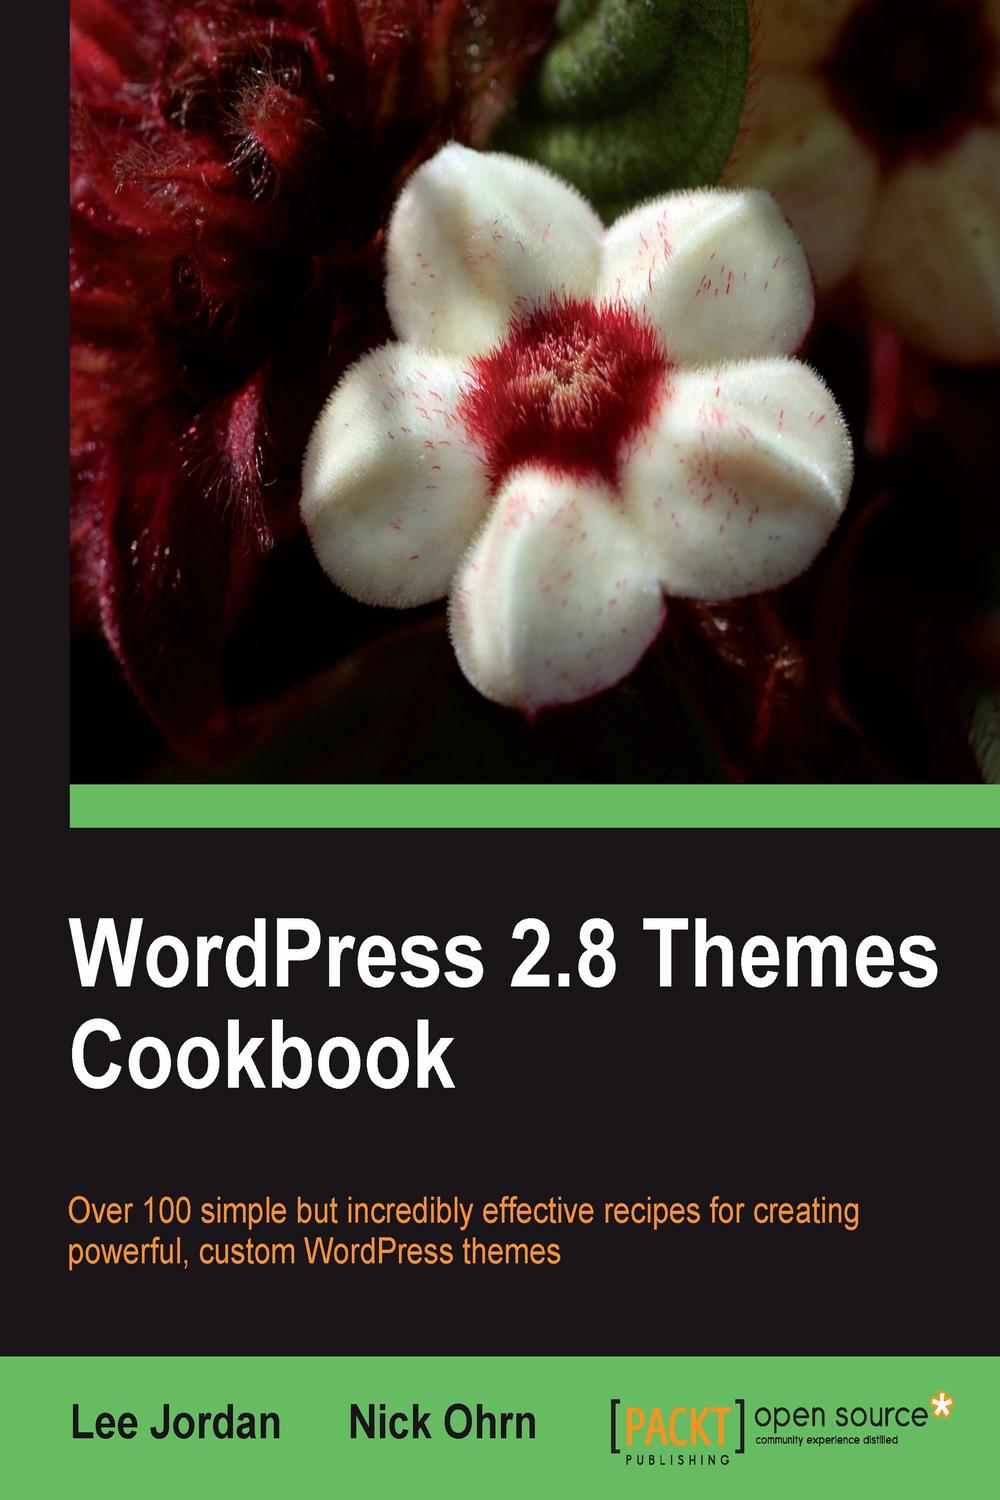 WordPress 2.8 Themes Cookbook - Nick Ohrn, Lee Jordan